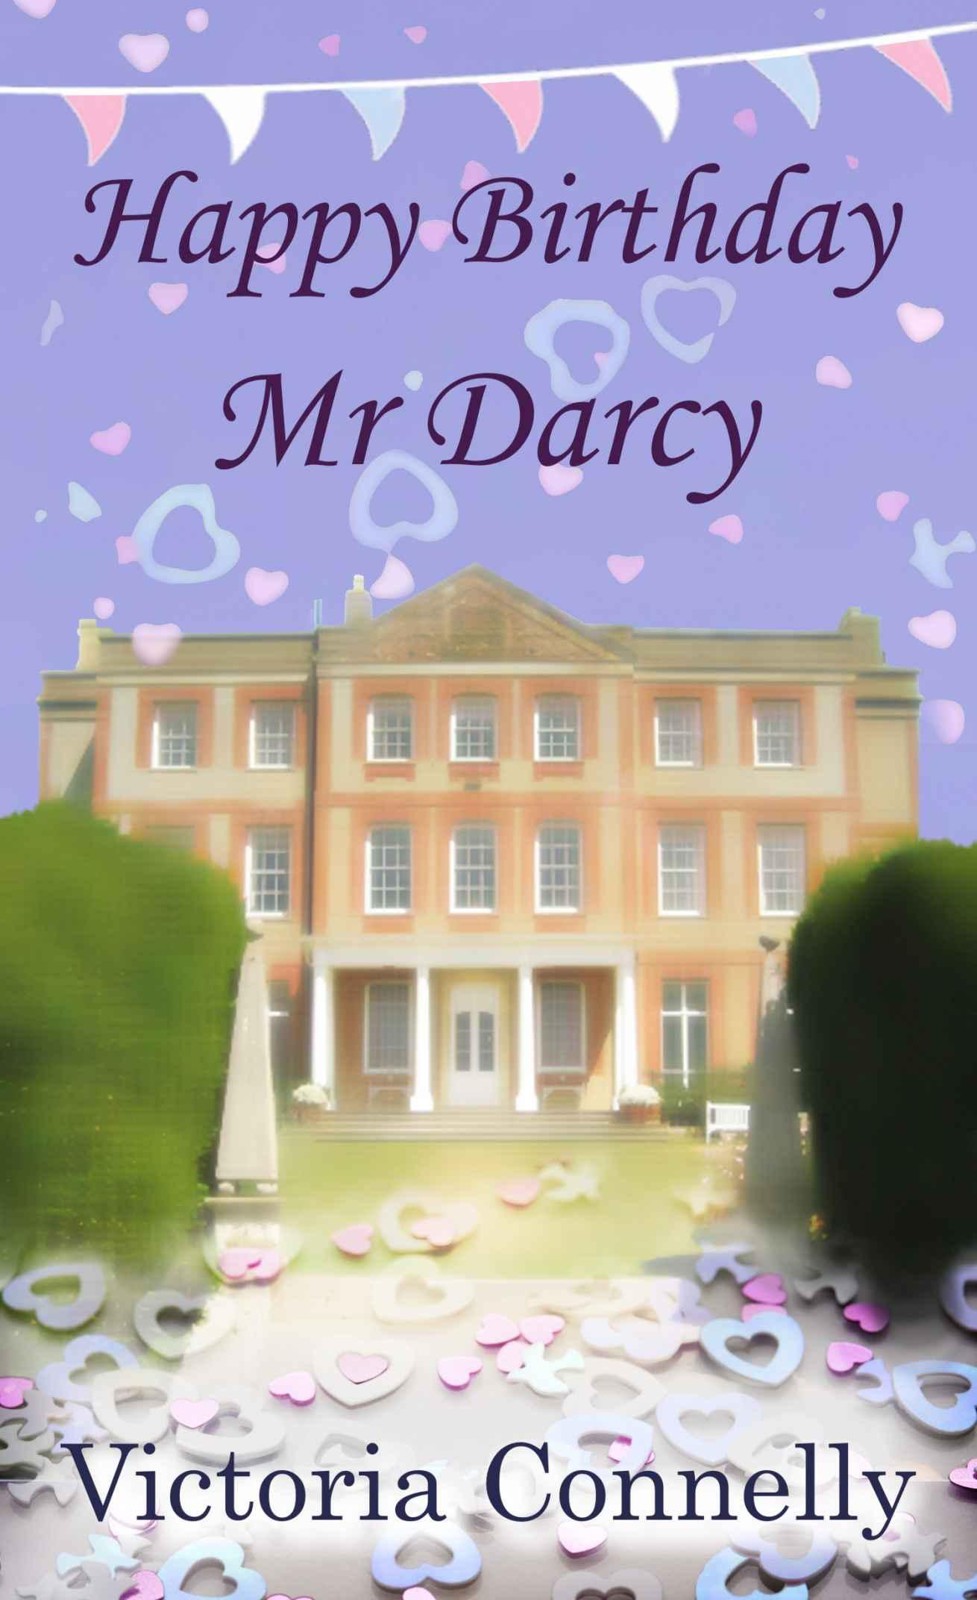 Happy Birthday, Mr Darcy